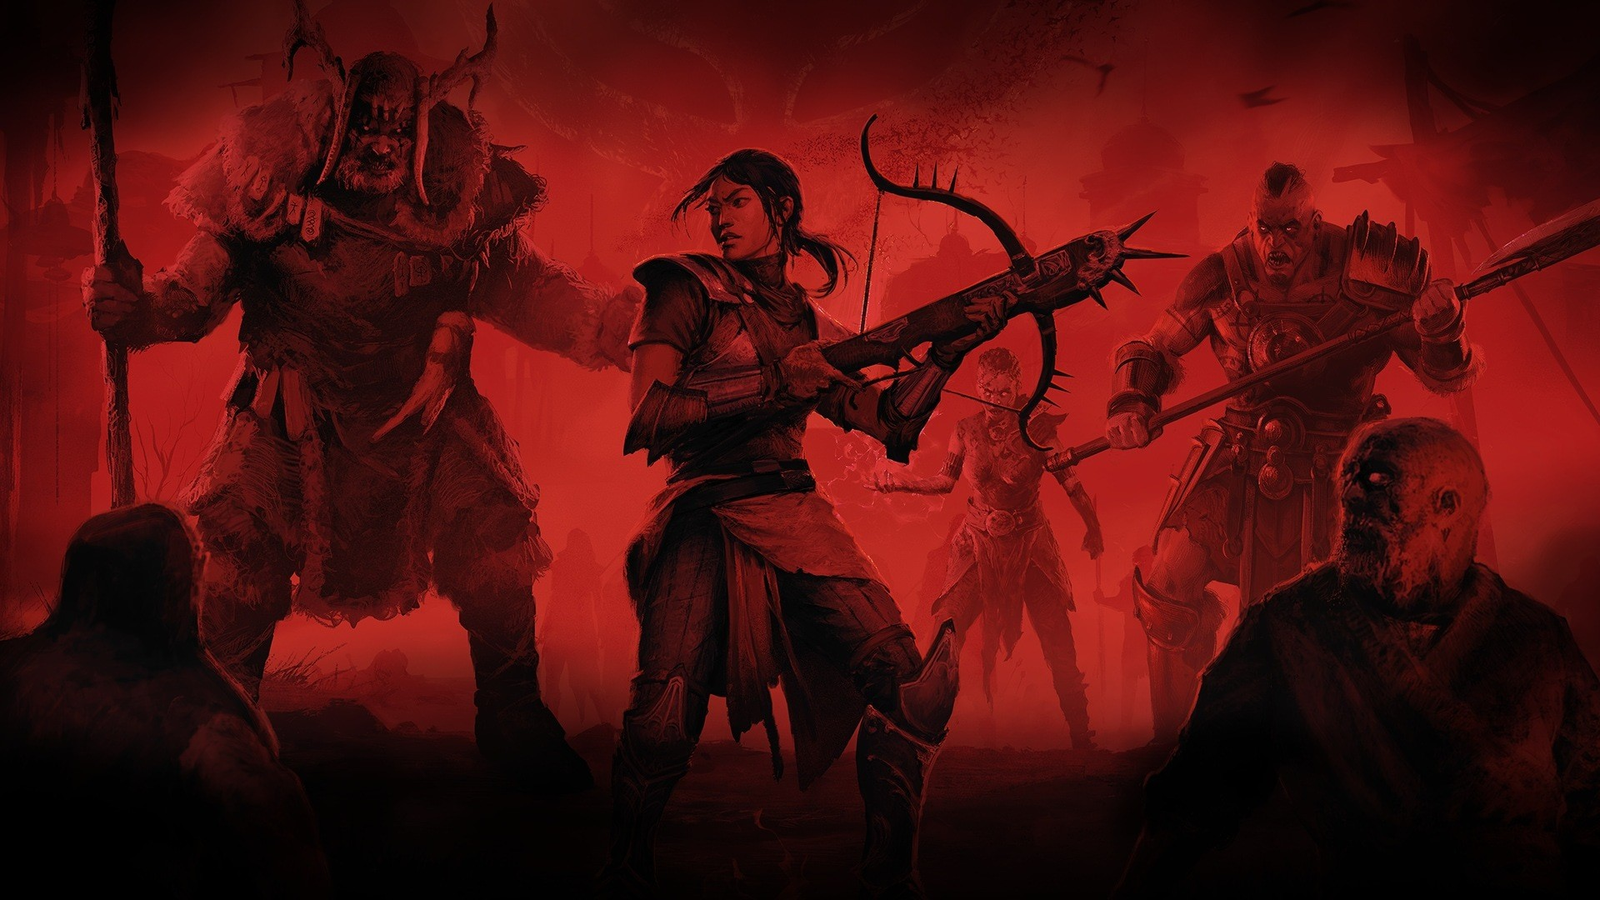 Diablo 4 Gets The Steam Deck Verified Badge - Steam Deck HQ